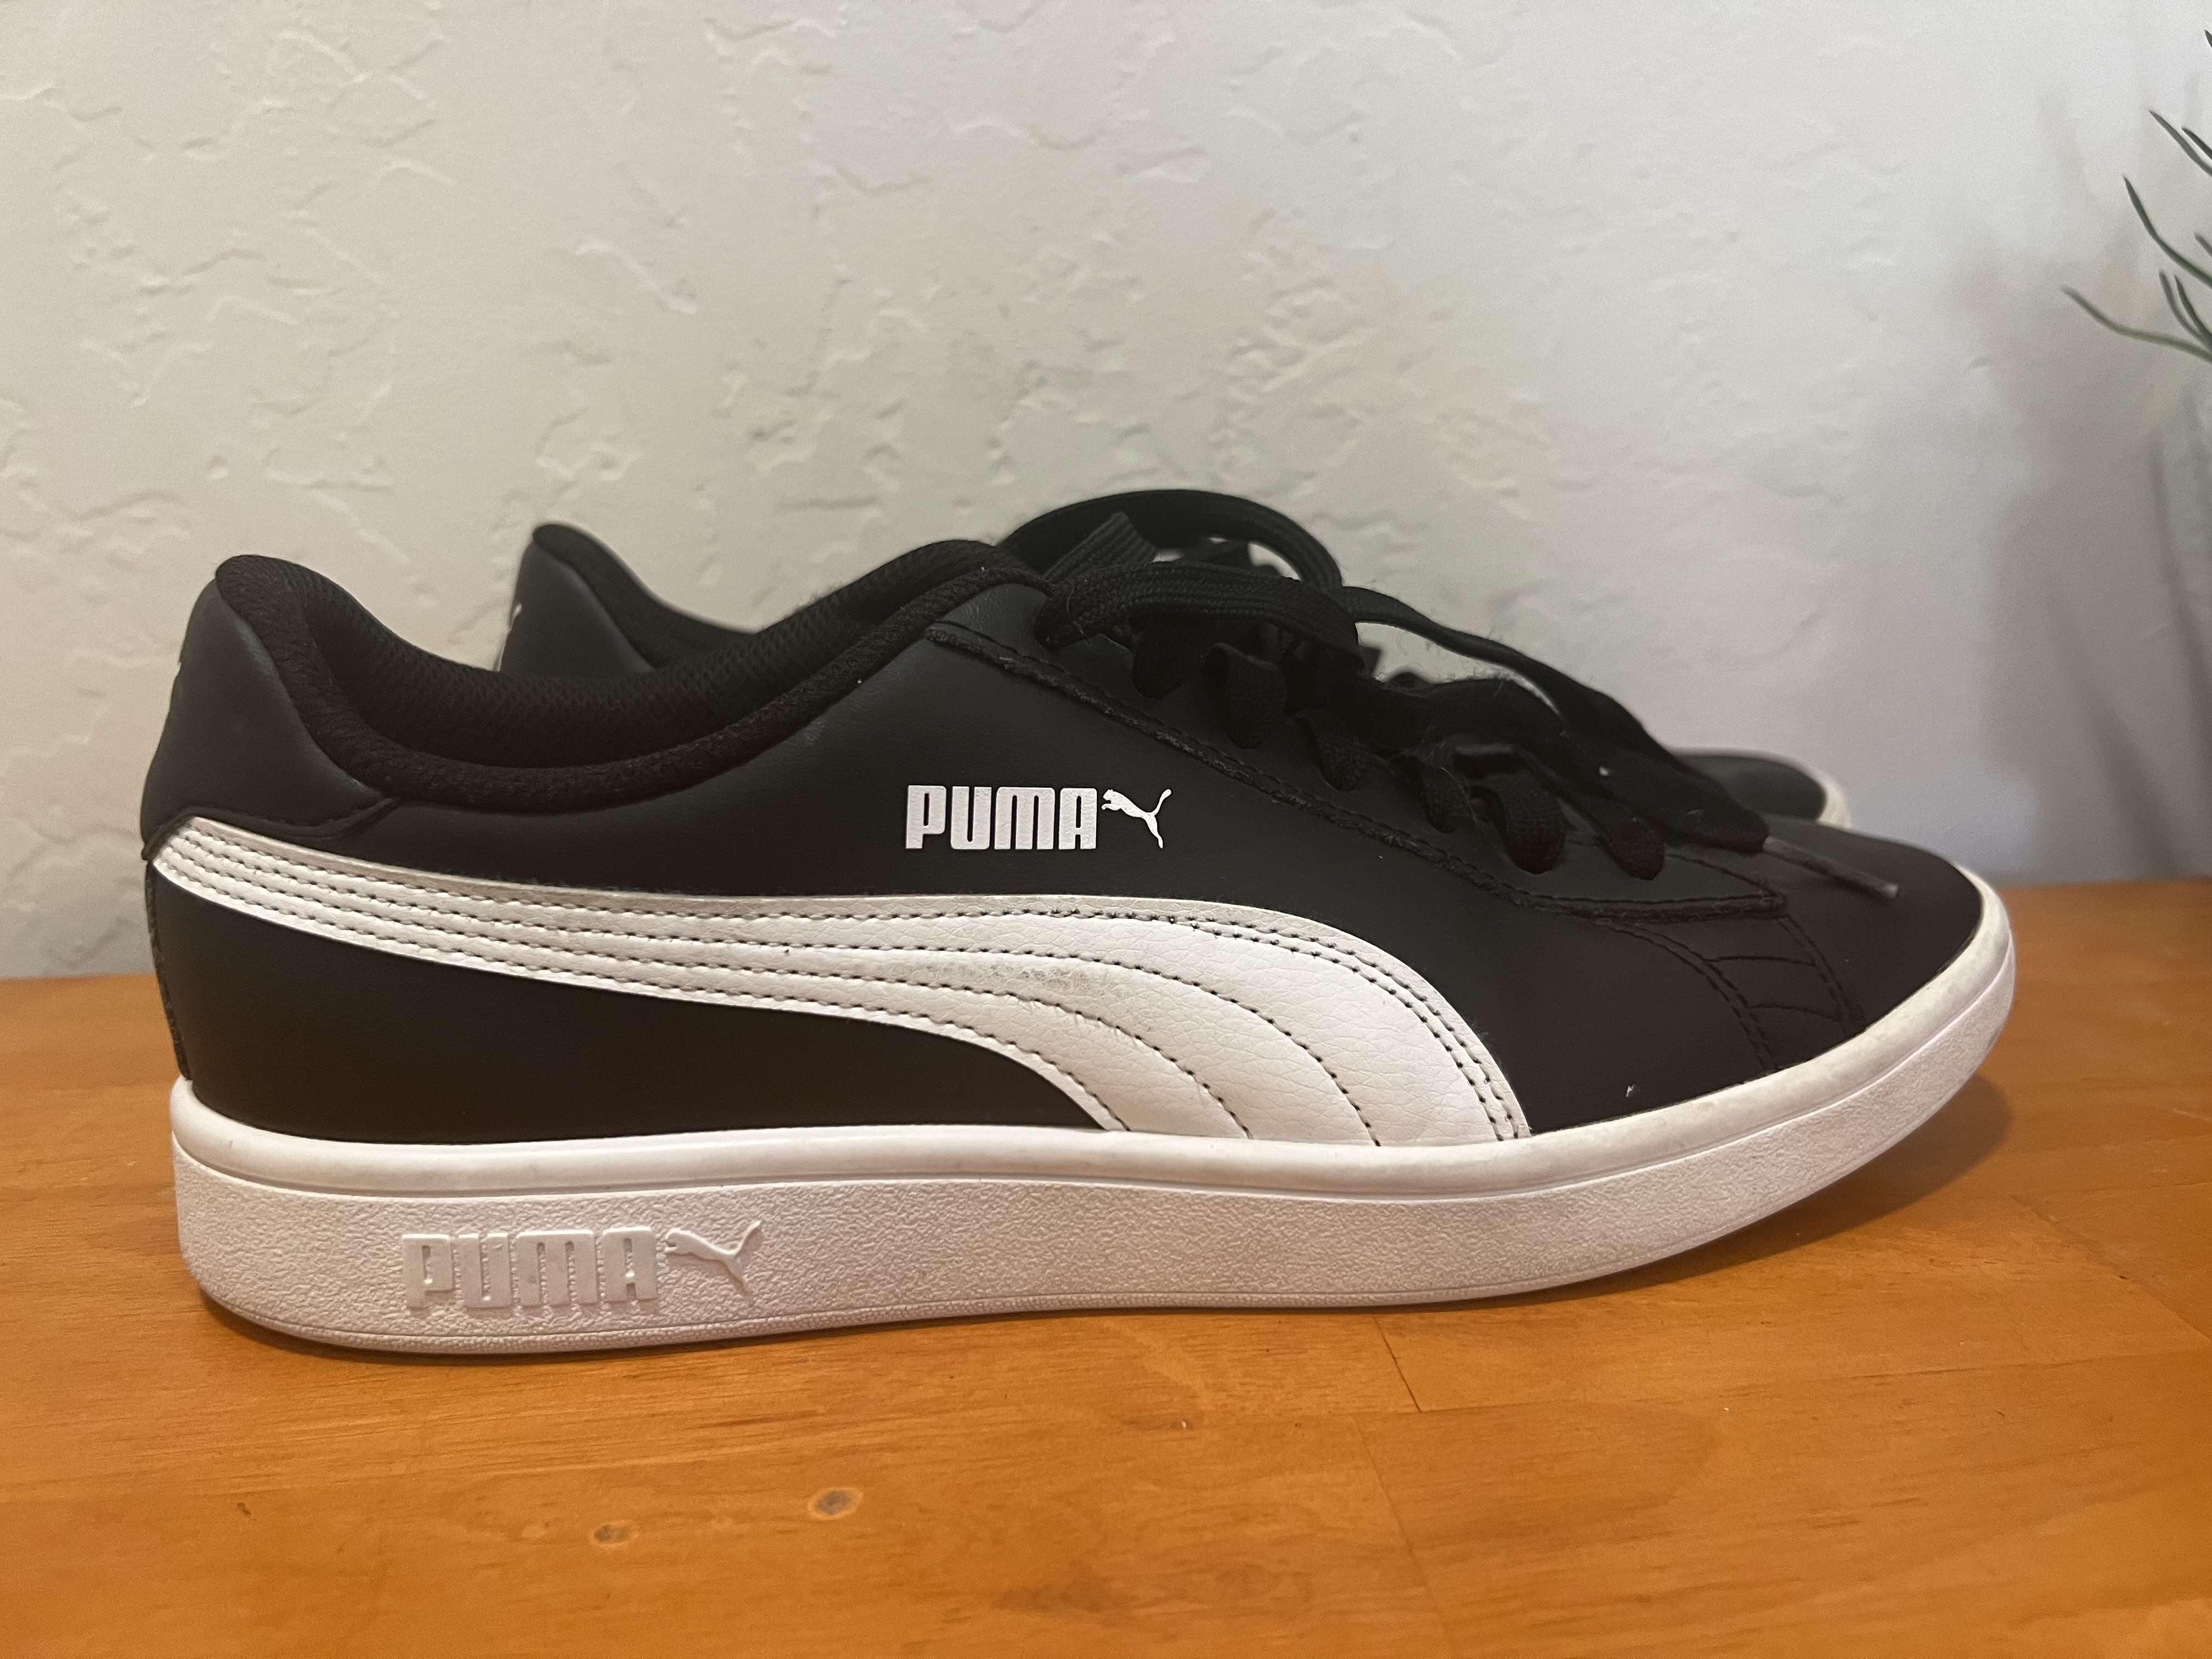 Puma Men's Smash V2 374513-04 Black White Running Shoes Lace Up Low Top Size 9.5: